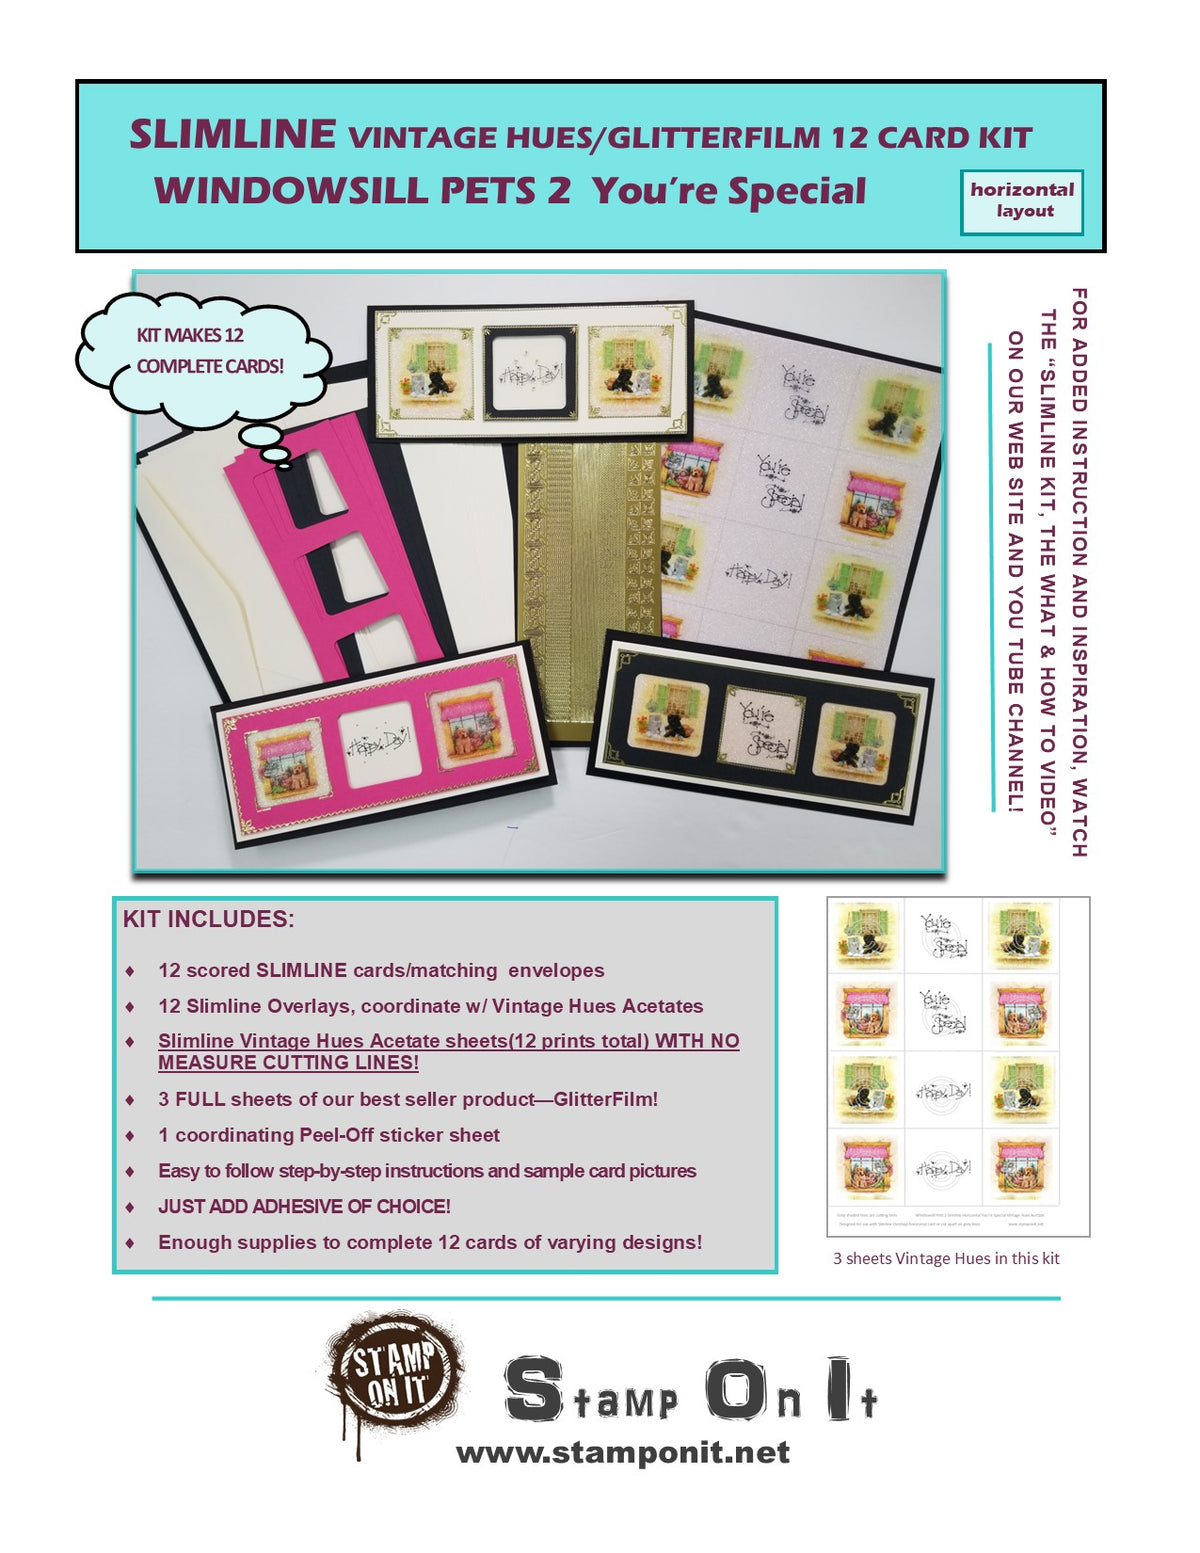 GlitterFilm & Vintage Hues 12 Slimline Card Kit Windowsill Pets 2 You're Special